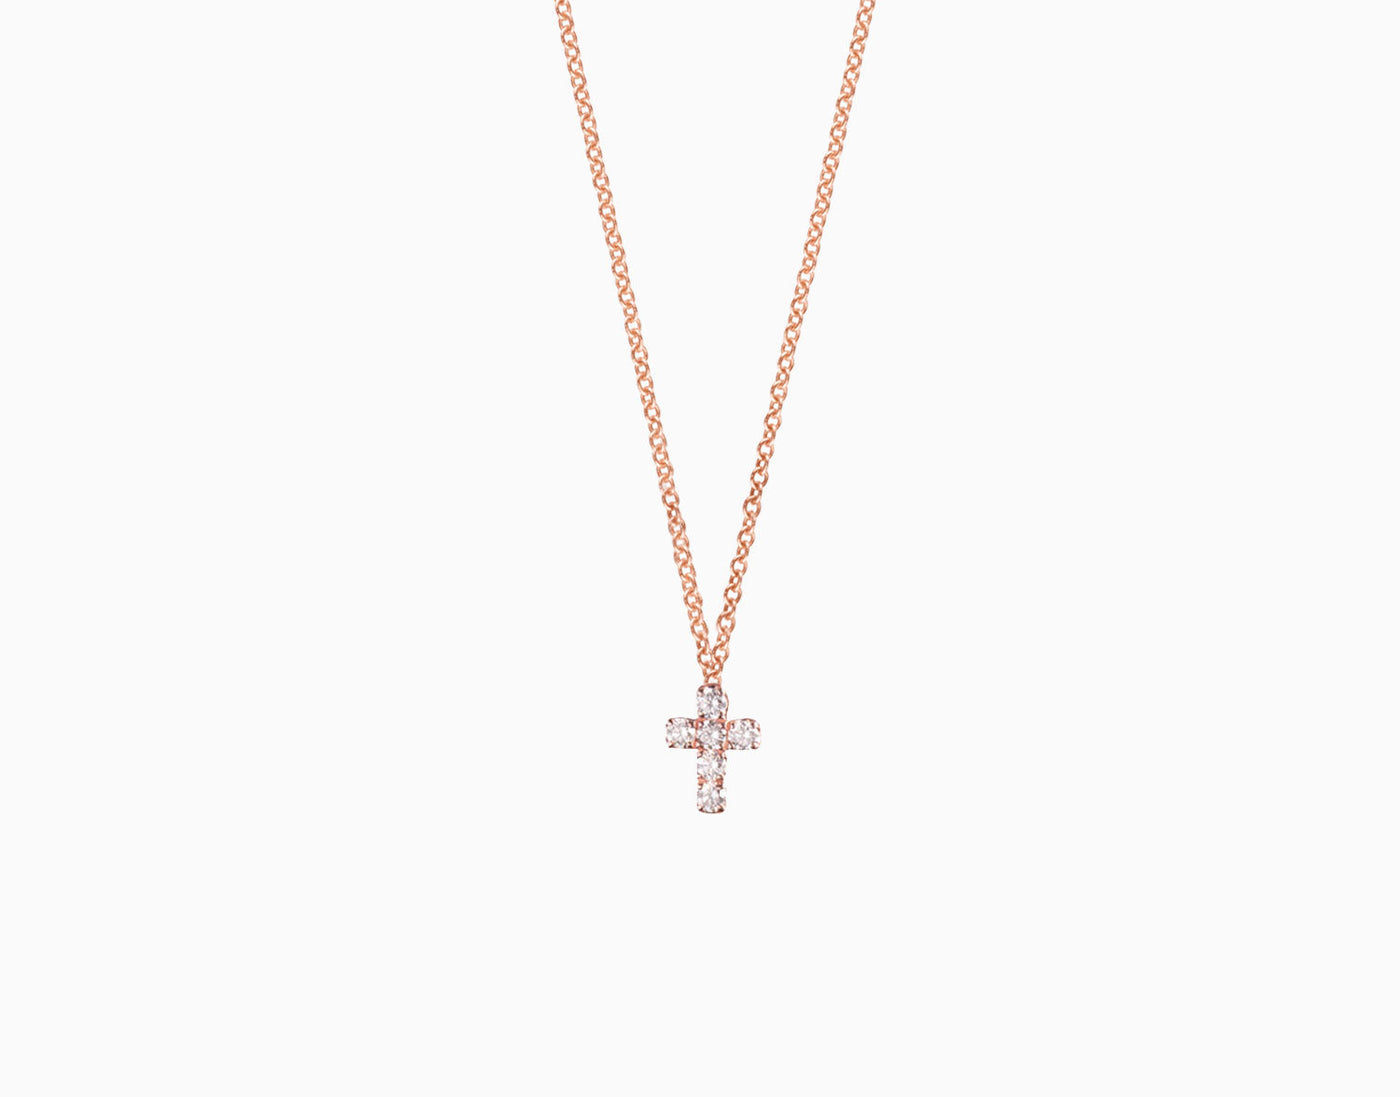 Baptismal cross necklace